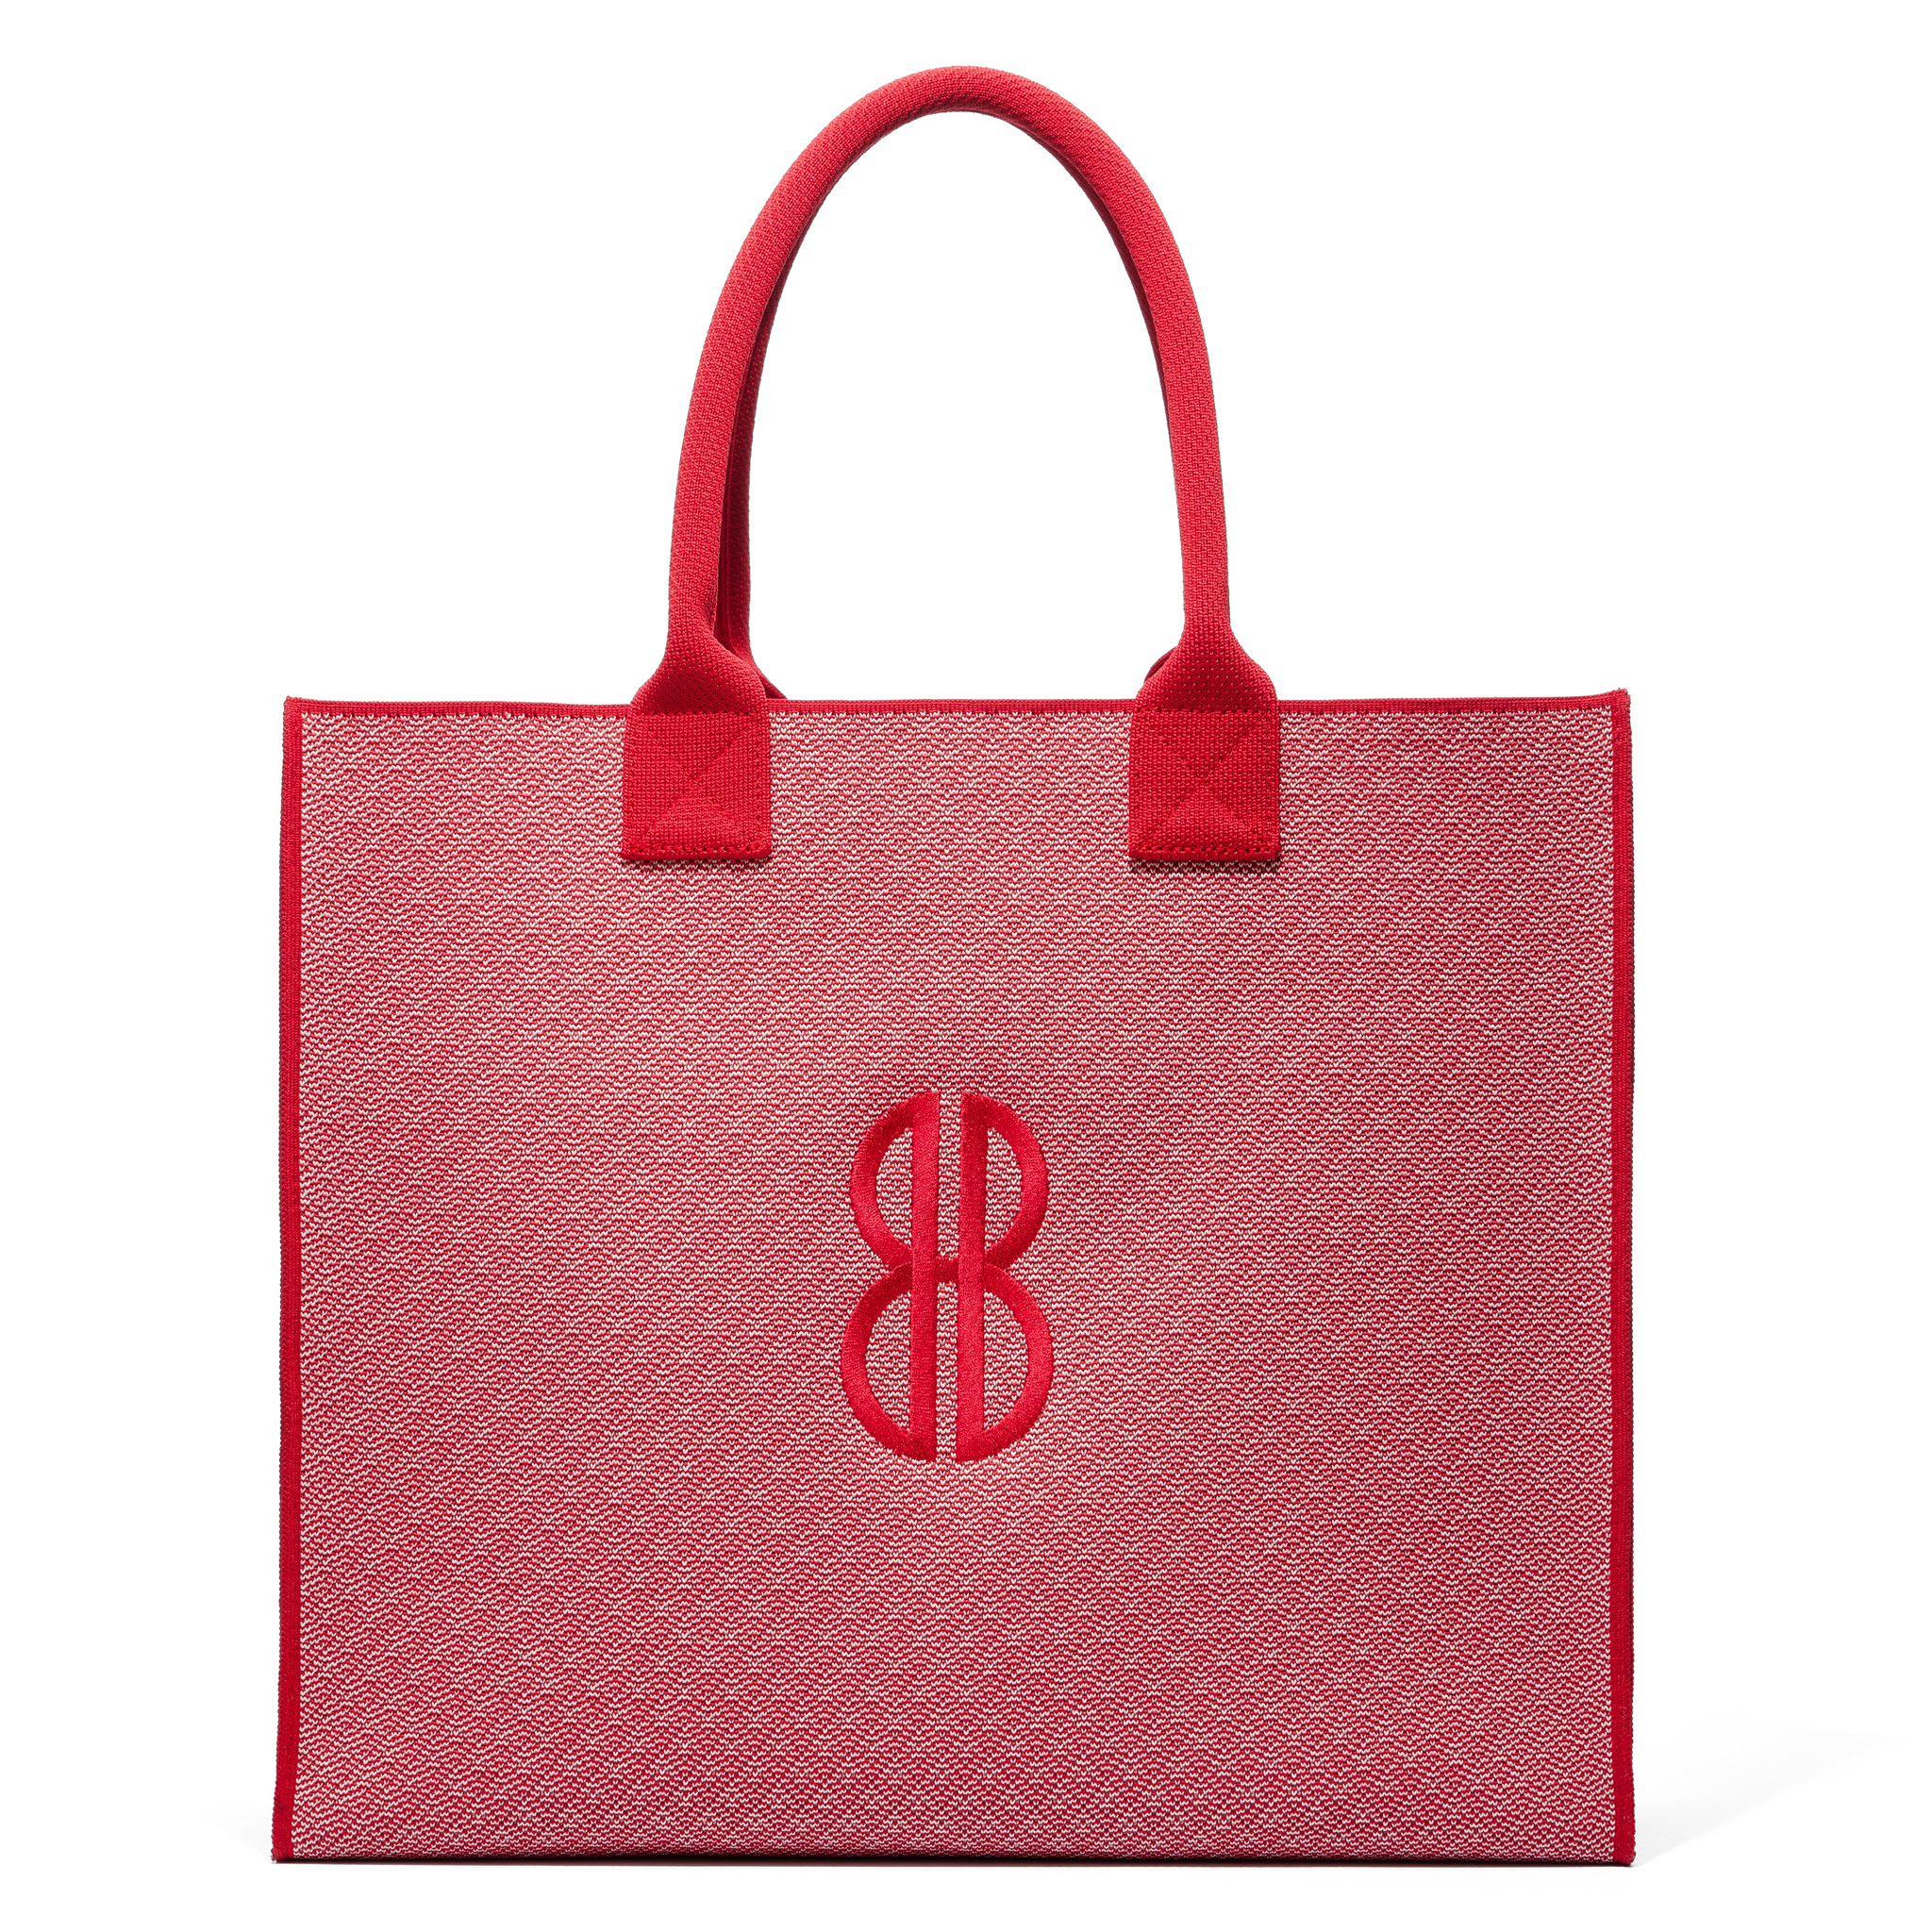 Madison Large Handbag